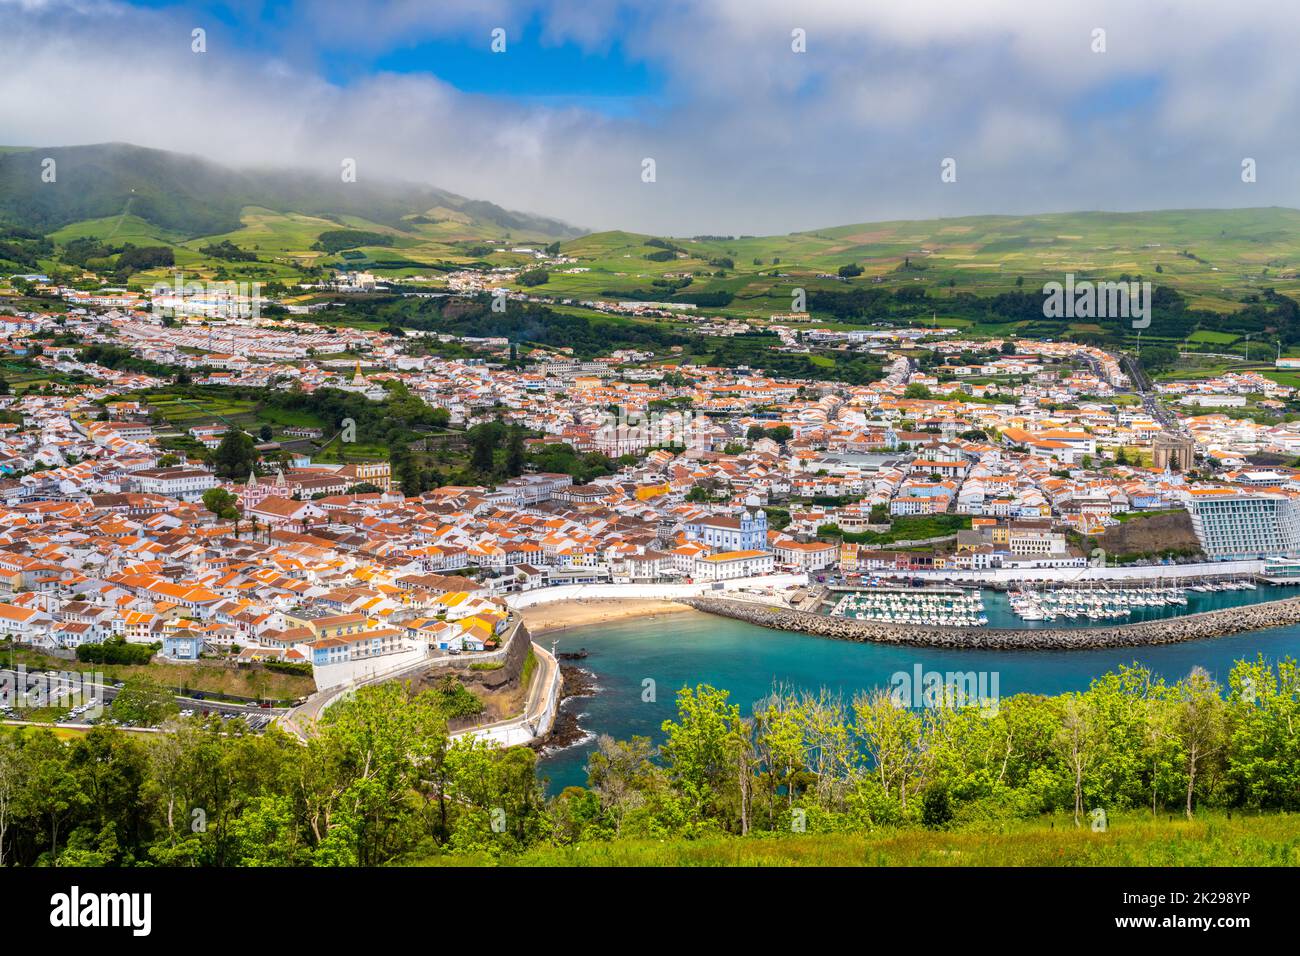 Vista del centro histórico de la ciudad, playa pública llamada Praia de Angra do Heroismo y la Iglesia Igreja da Misericordia de Monte Brasil, en Angra do Heroismo, isla de Terceira, Azores, Portugal. Foto de stock